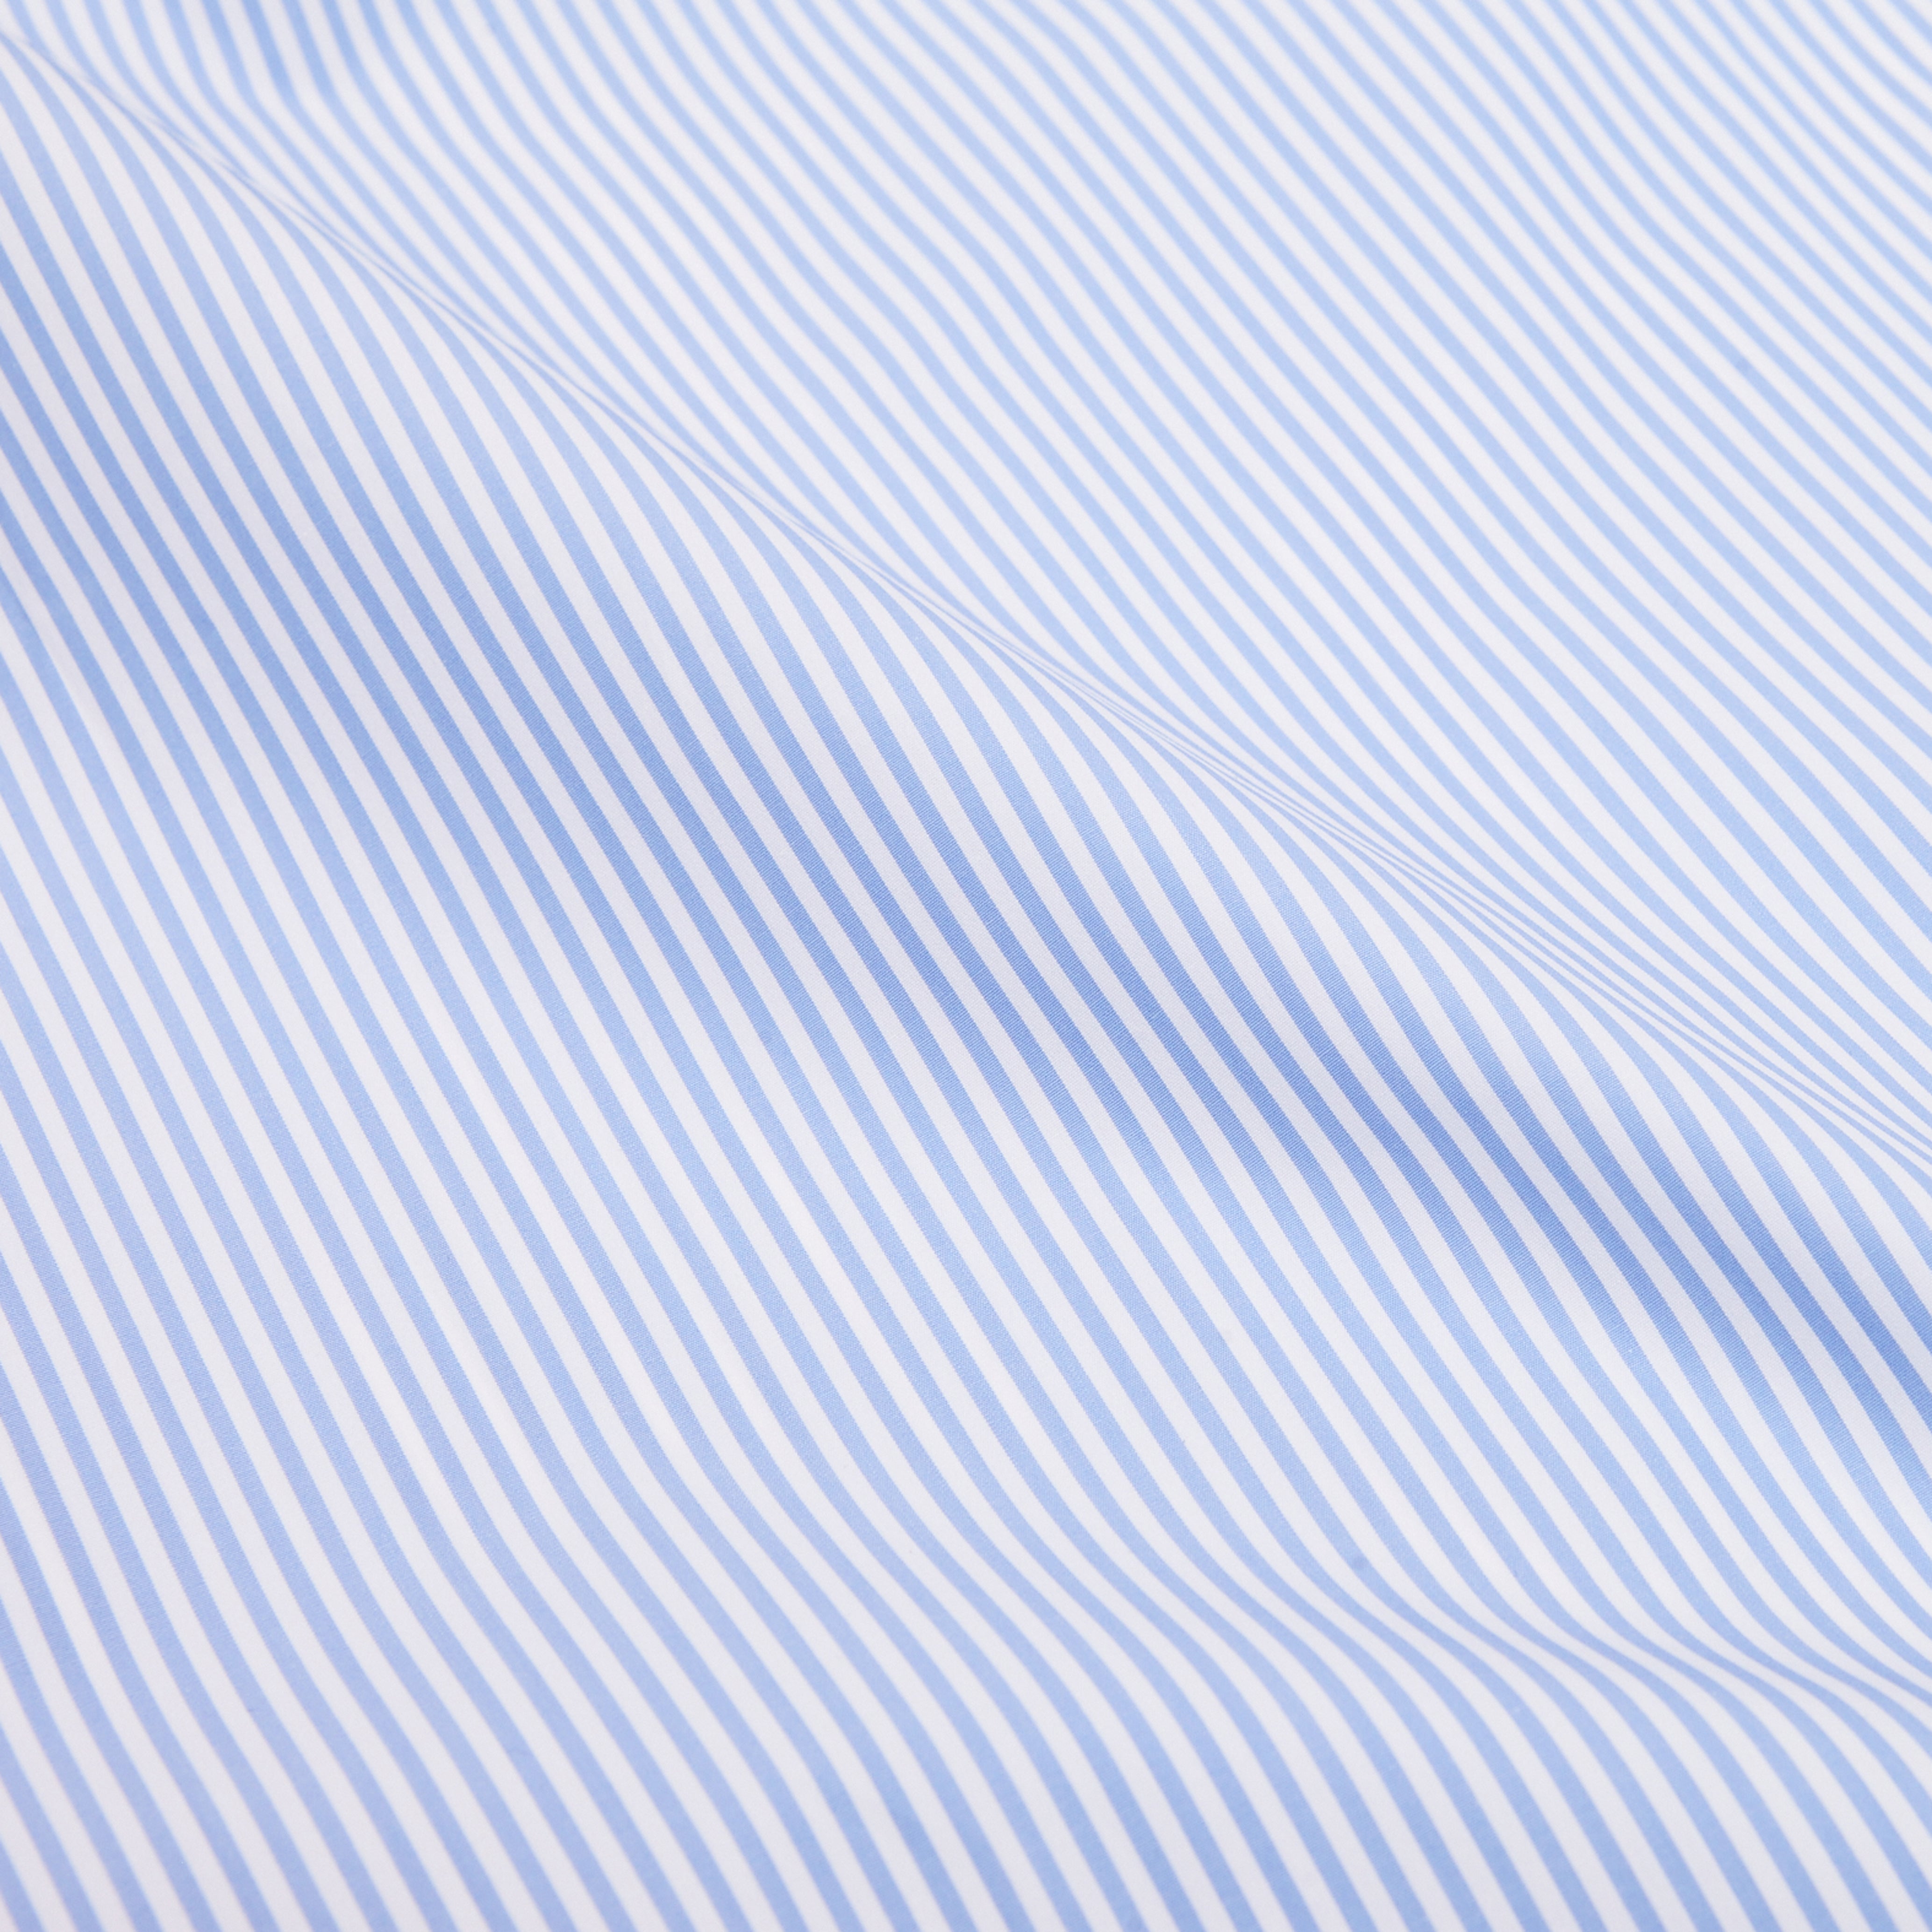 Blue Patchwork Stripe Spread Collar Shirt